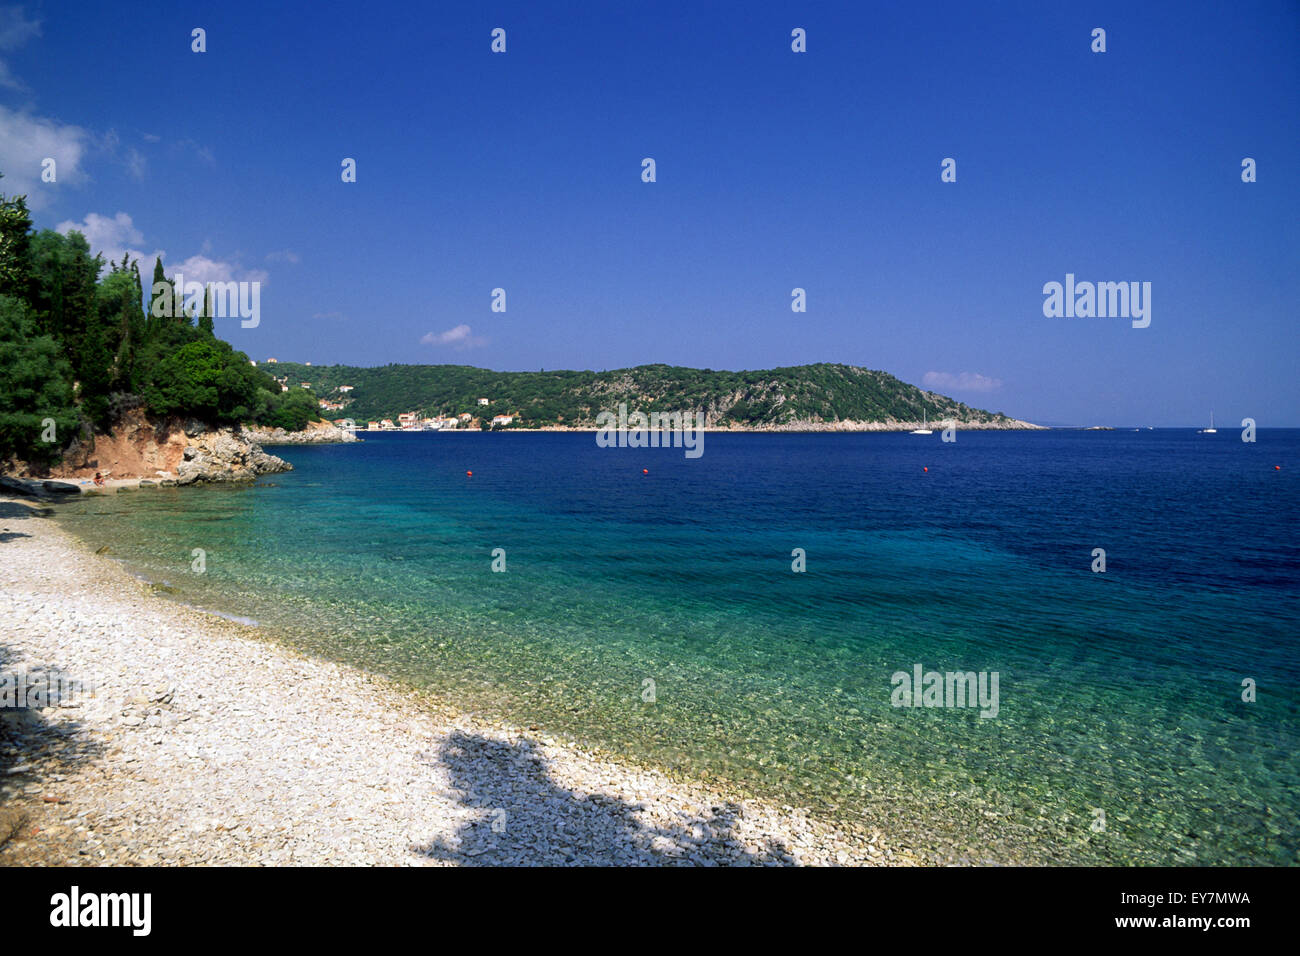 Greece, Ionian Islands, Ithaca, Kioni beach Stock Photo